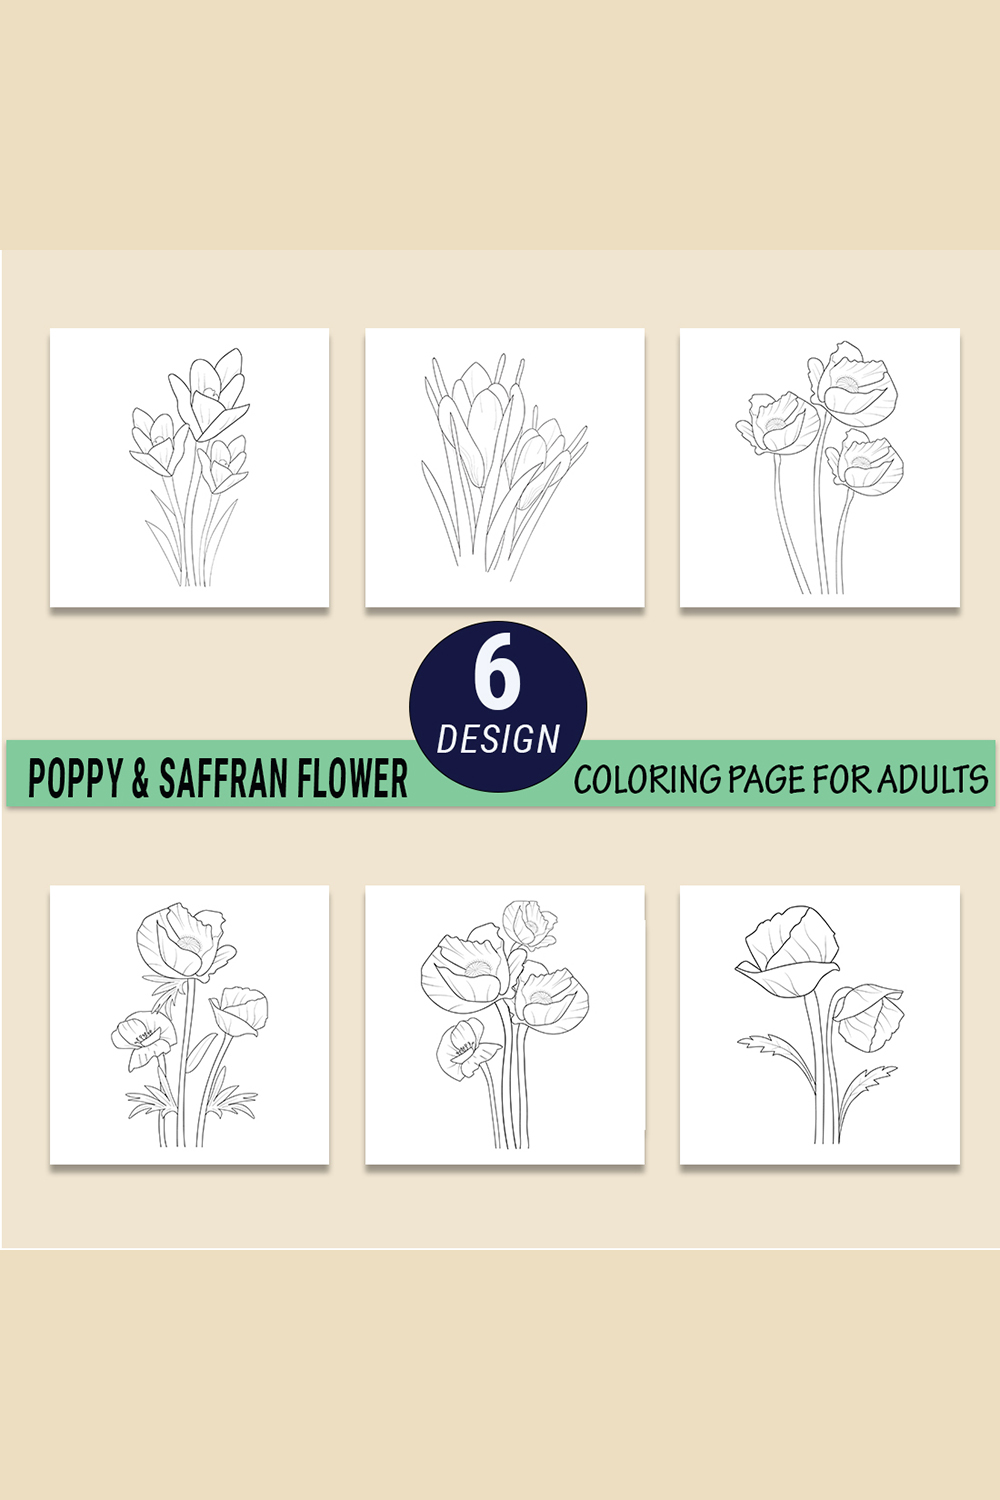 California poppy drawing, crocus flower coloring page, saffron flower vector art crocus flower illustration, pinterest preview image.